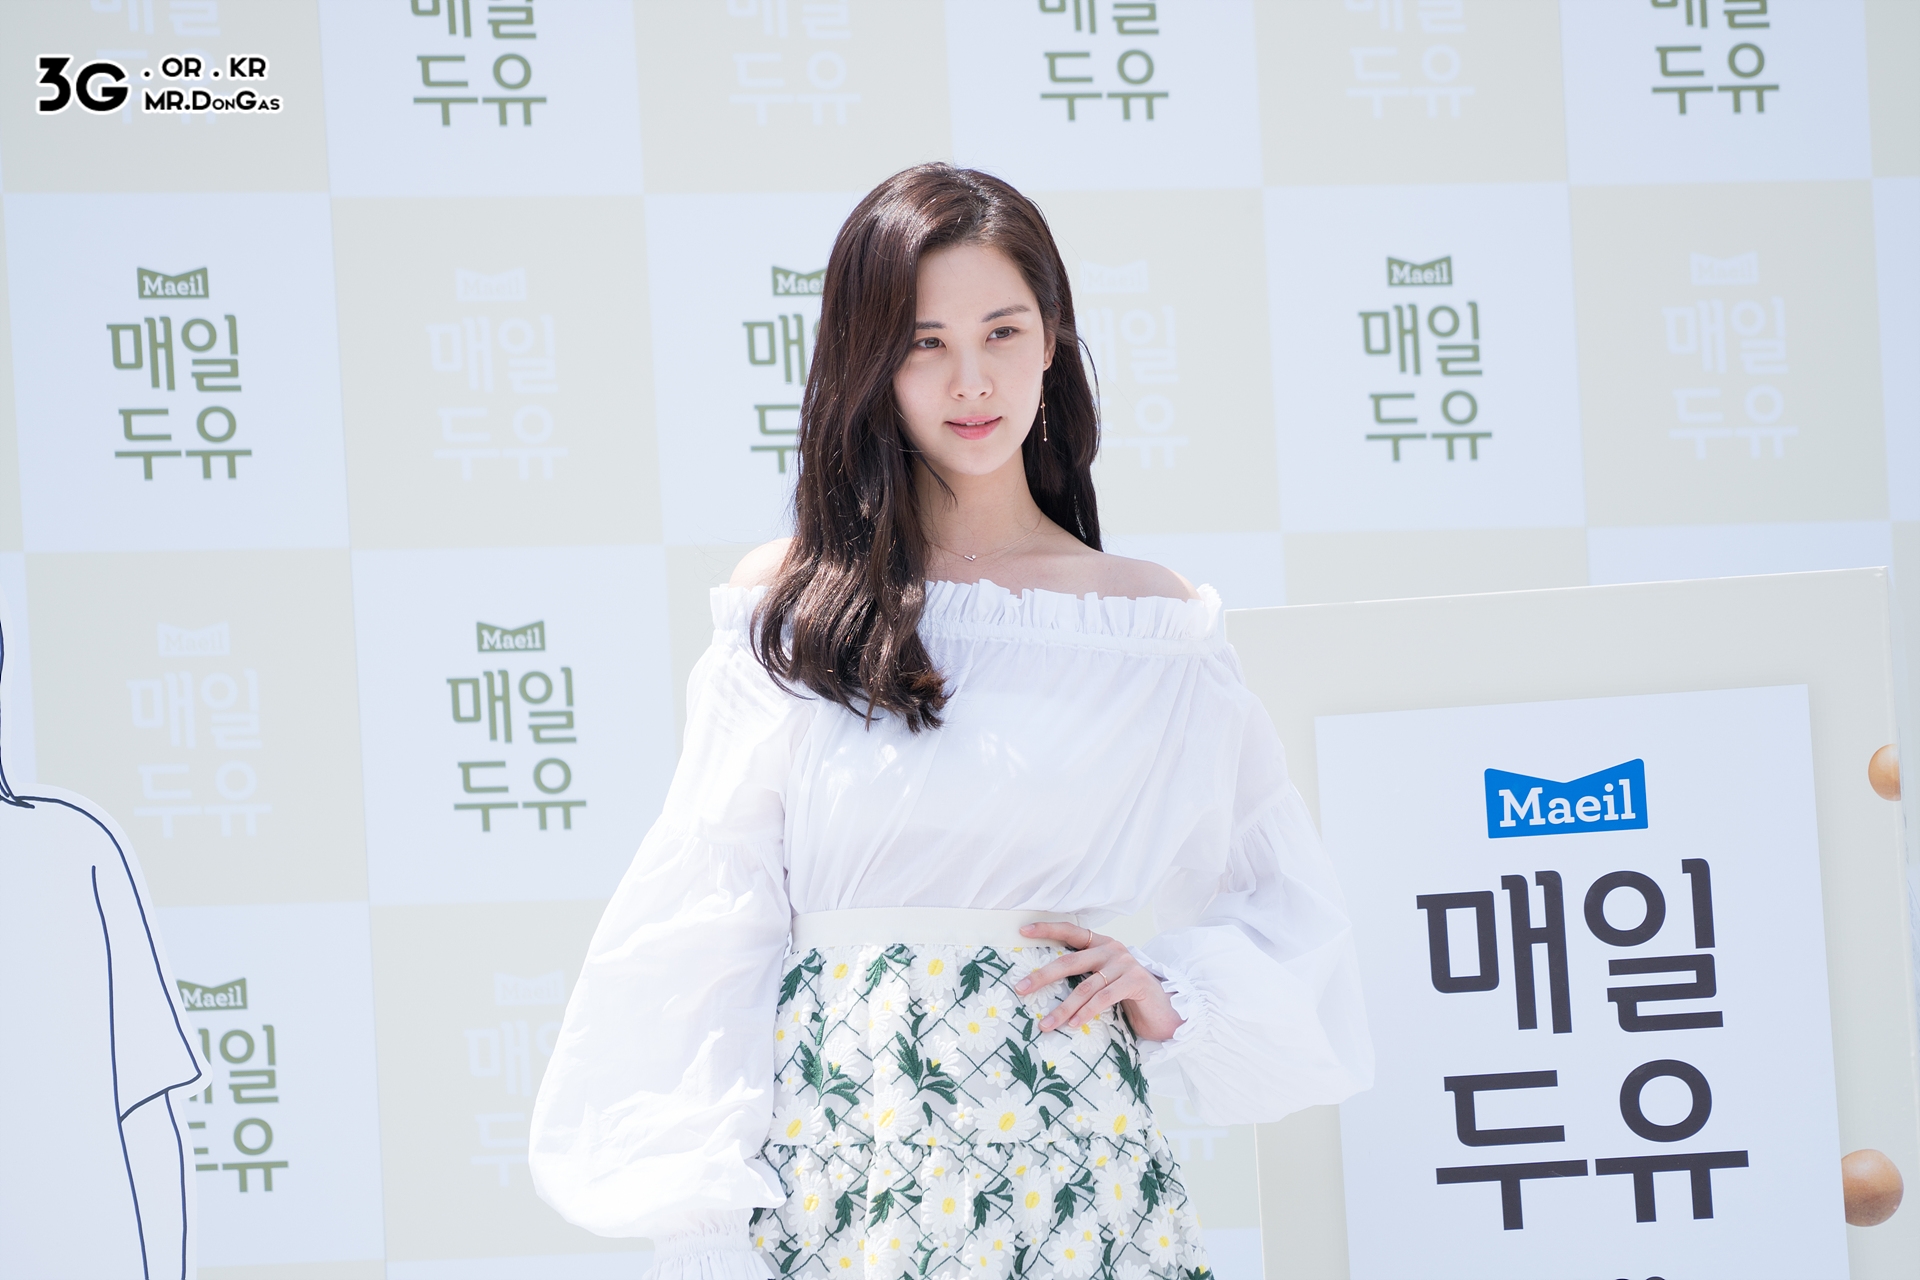  [PIC][03-06-2017]SeoHyun tham dự sự kiện “City Forestival - Maeil Duyou 'Confidence Diary'” vào chiều nay - Page 2 2673E2445933CE21265414